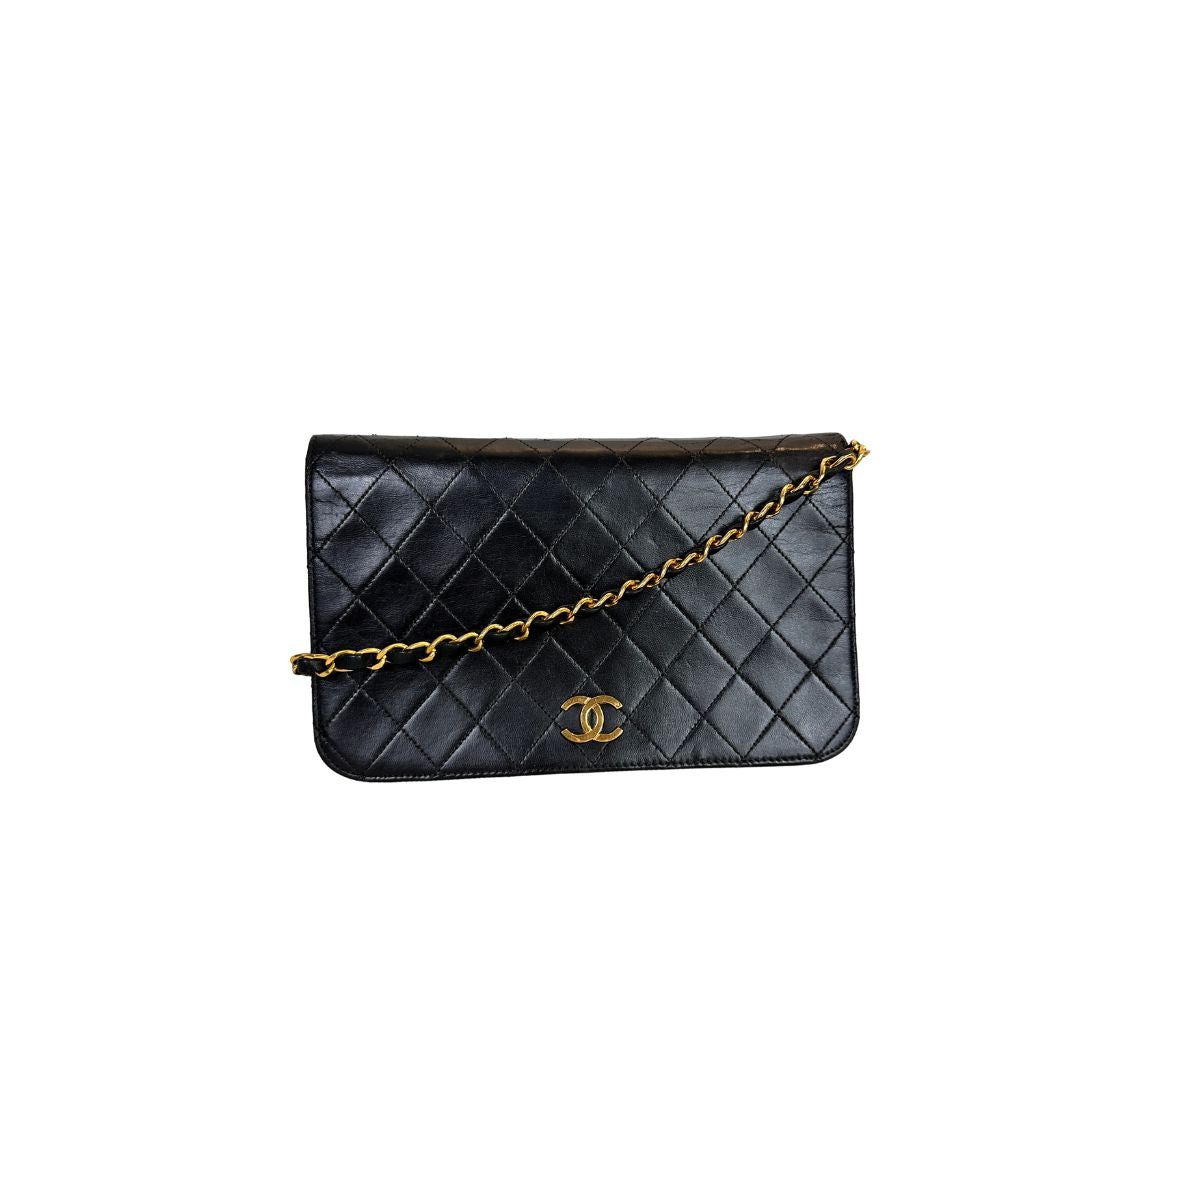 Bag Boy Medium Limited Edition Black Leather Chanel  Second Hand   Occasion  Vintega